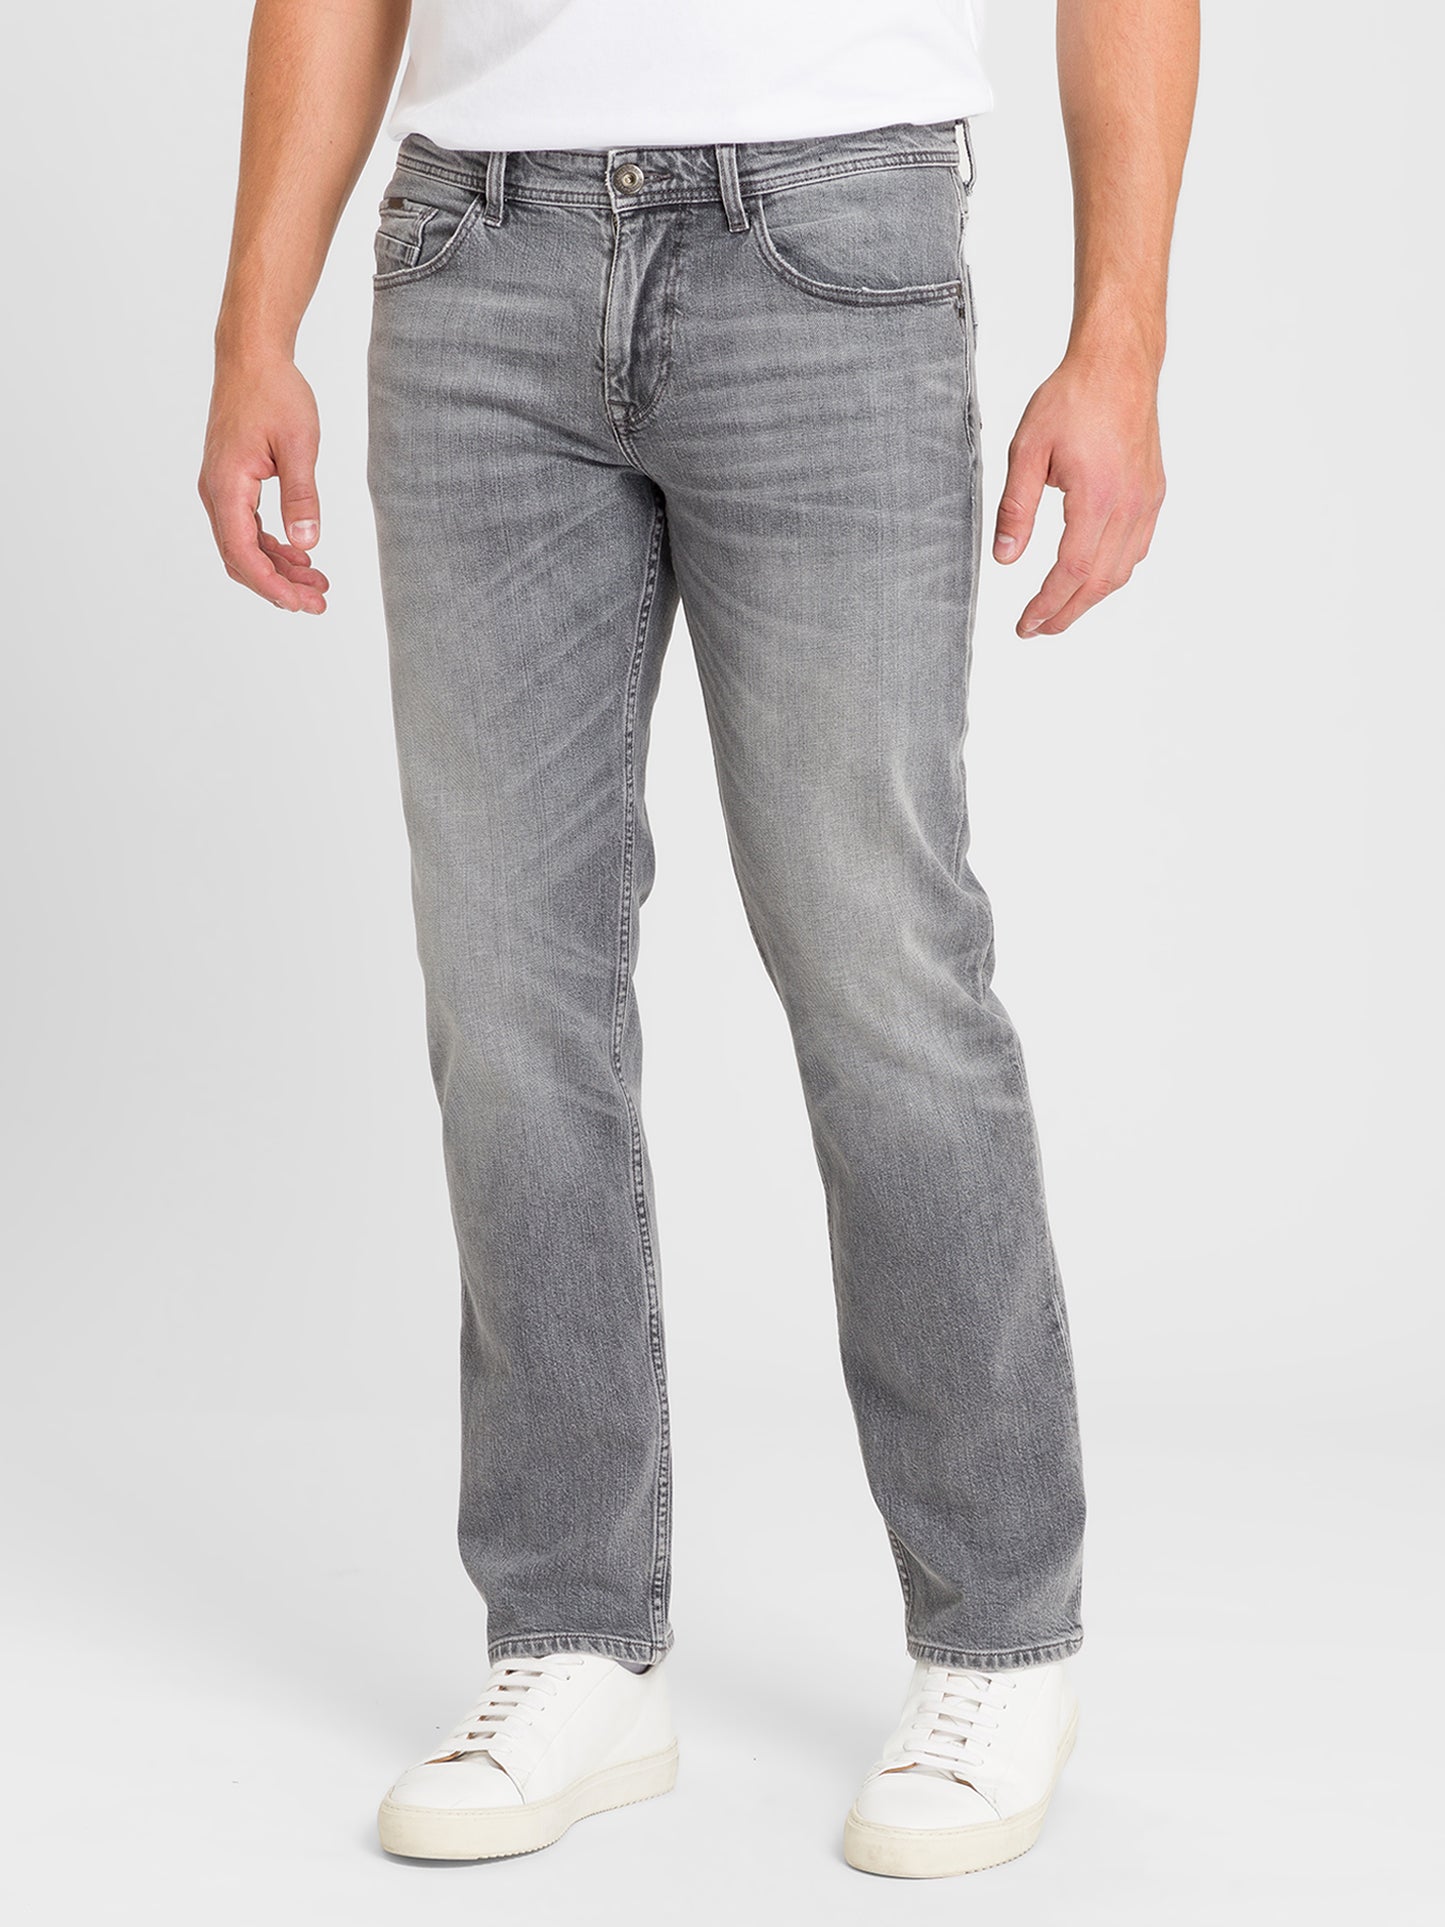 Antonio Men's Relaxed Fit Regular Waist Straight Leg Jeans light grey